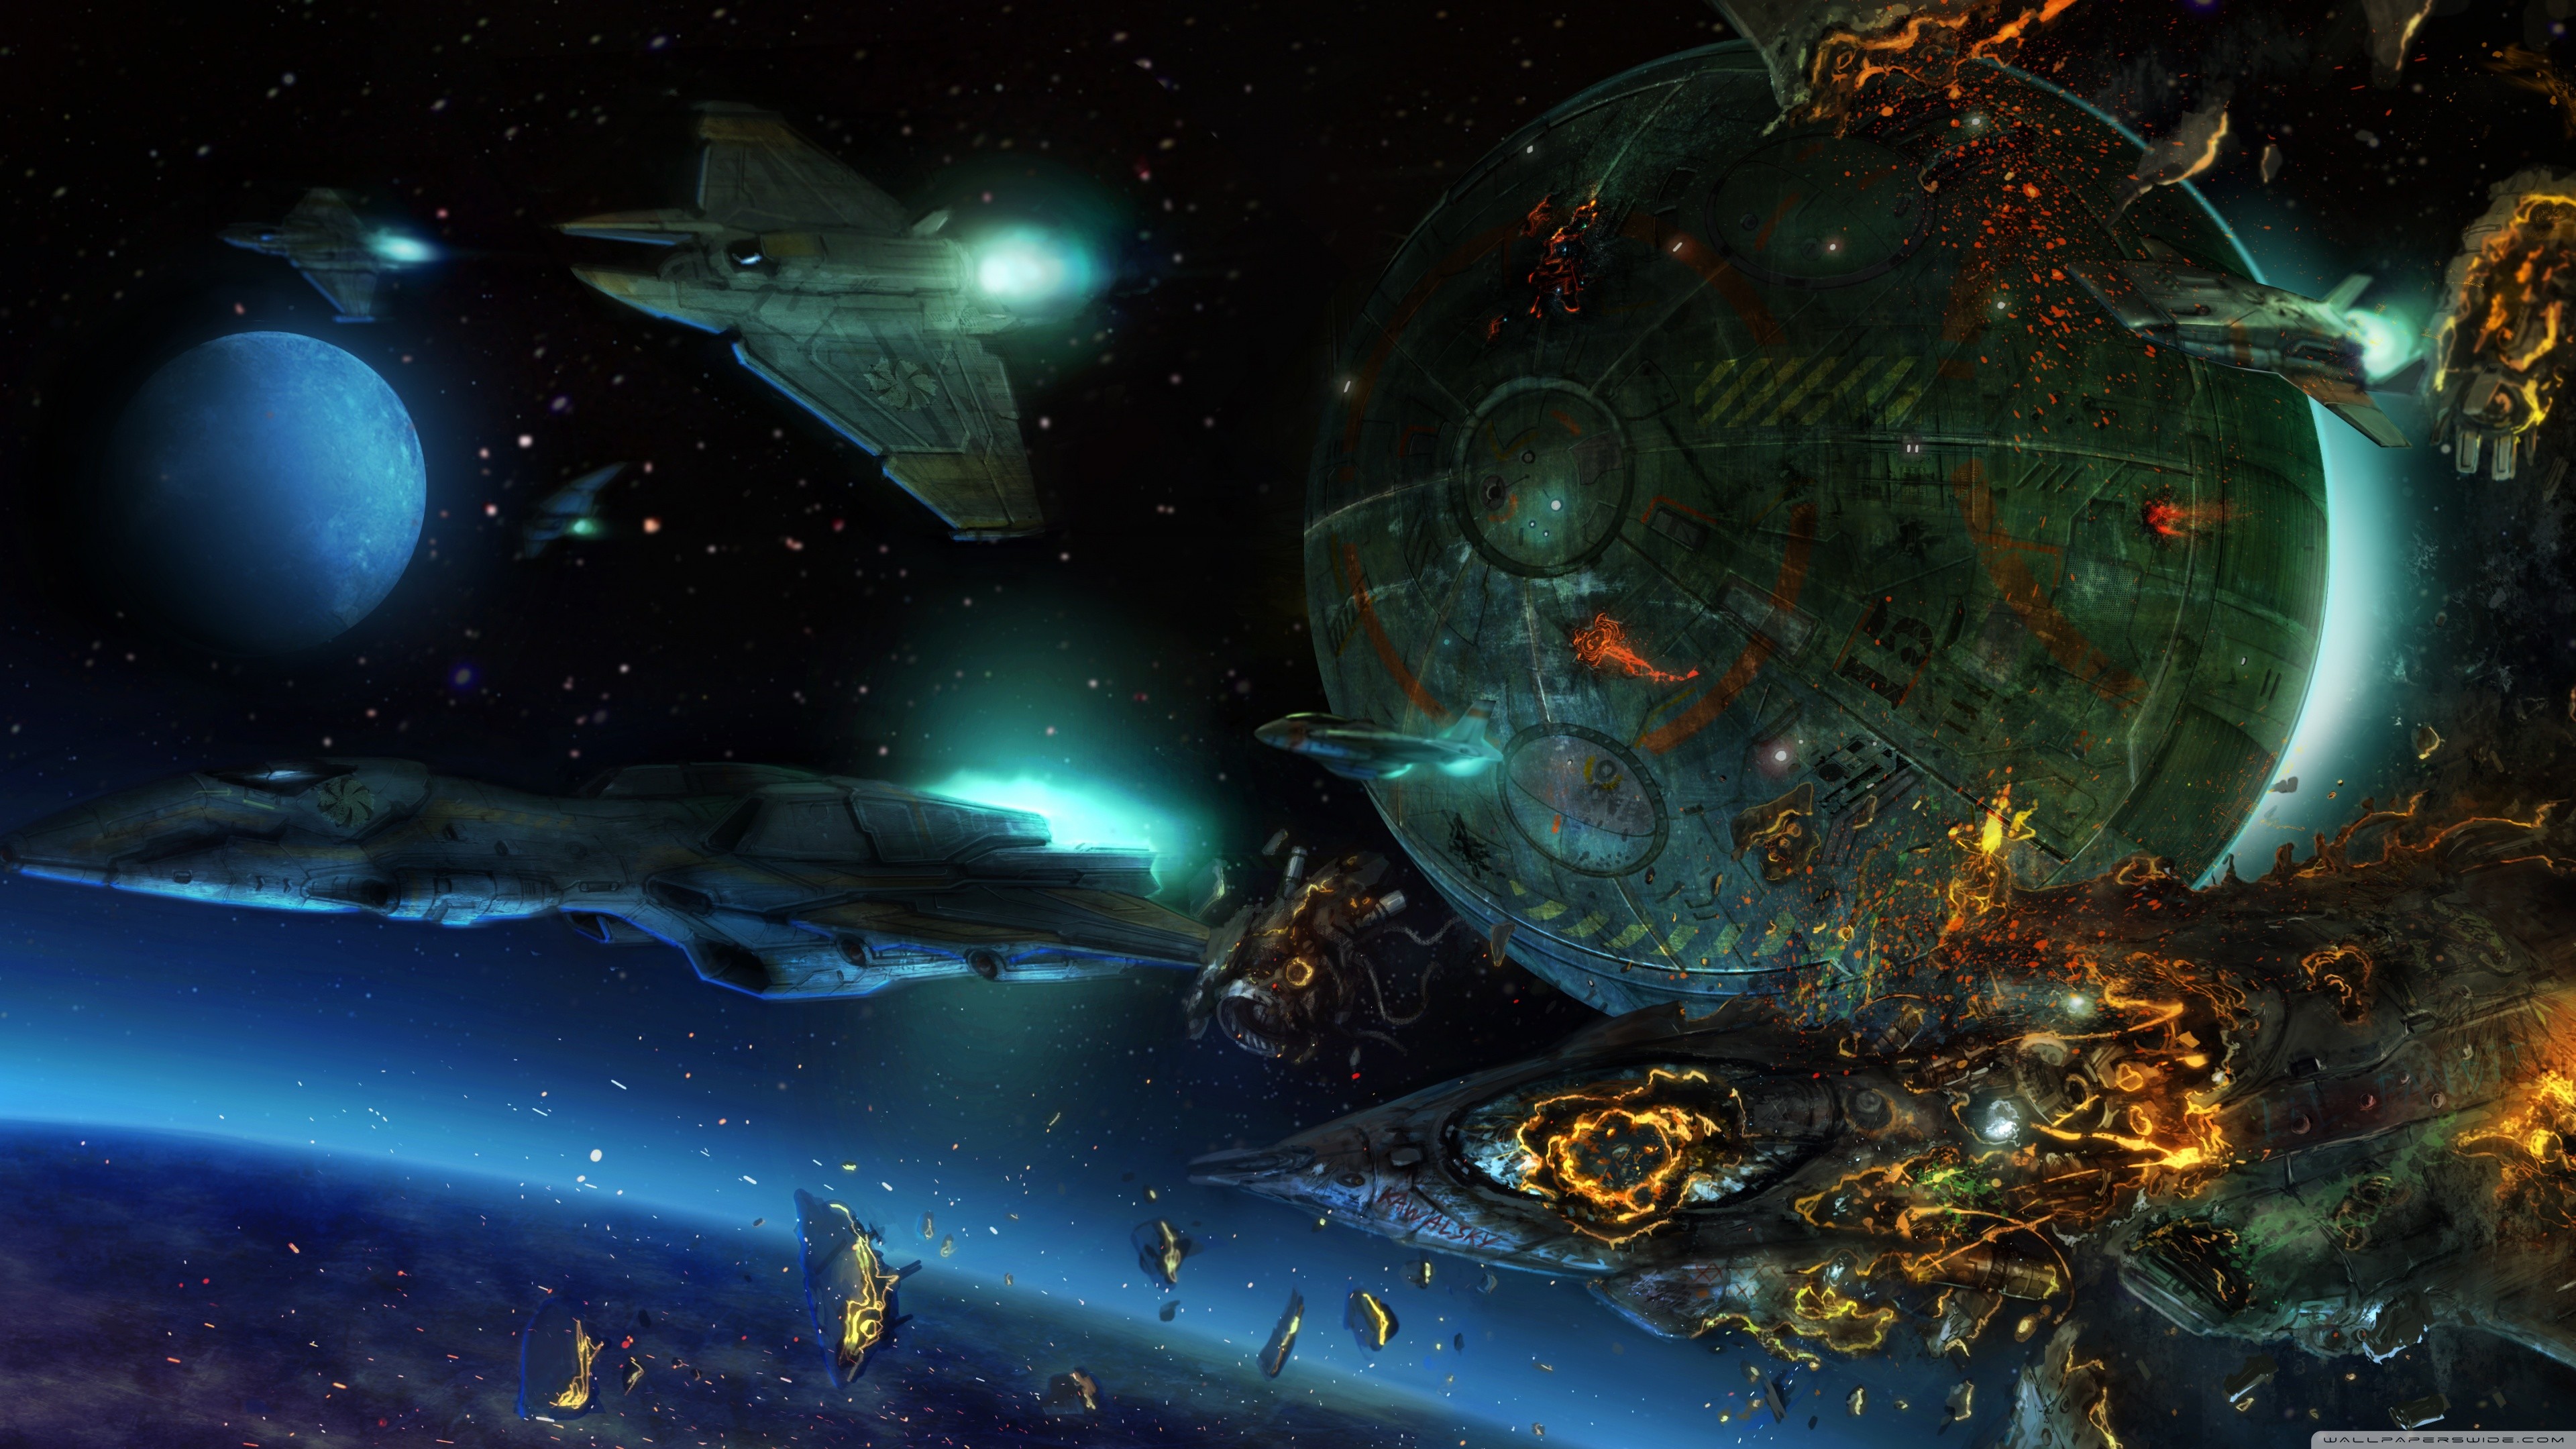 Space War Wallpaper Image